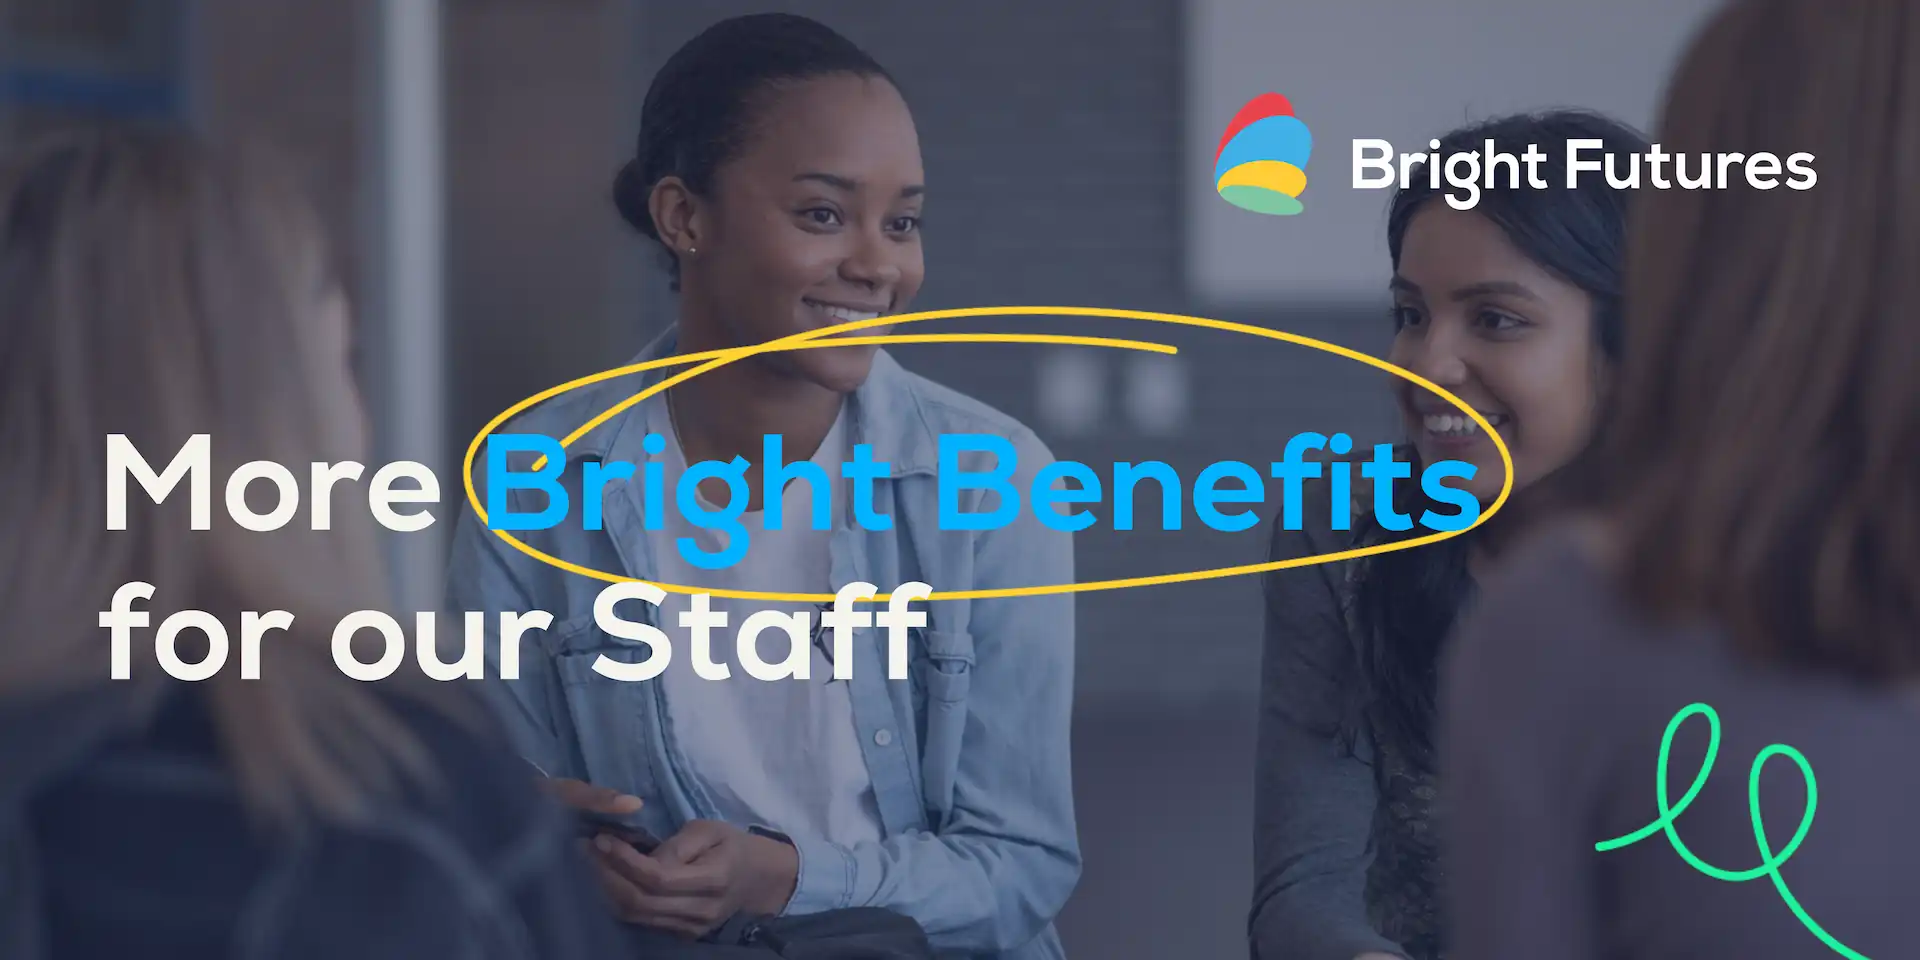 Bright Futures Care Staff benefits